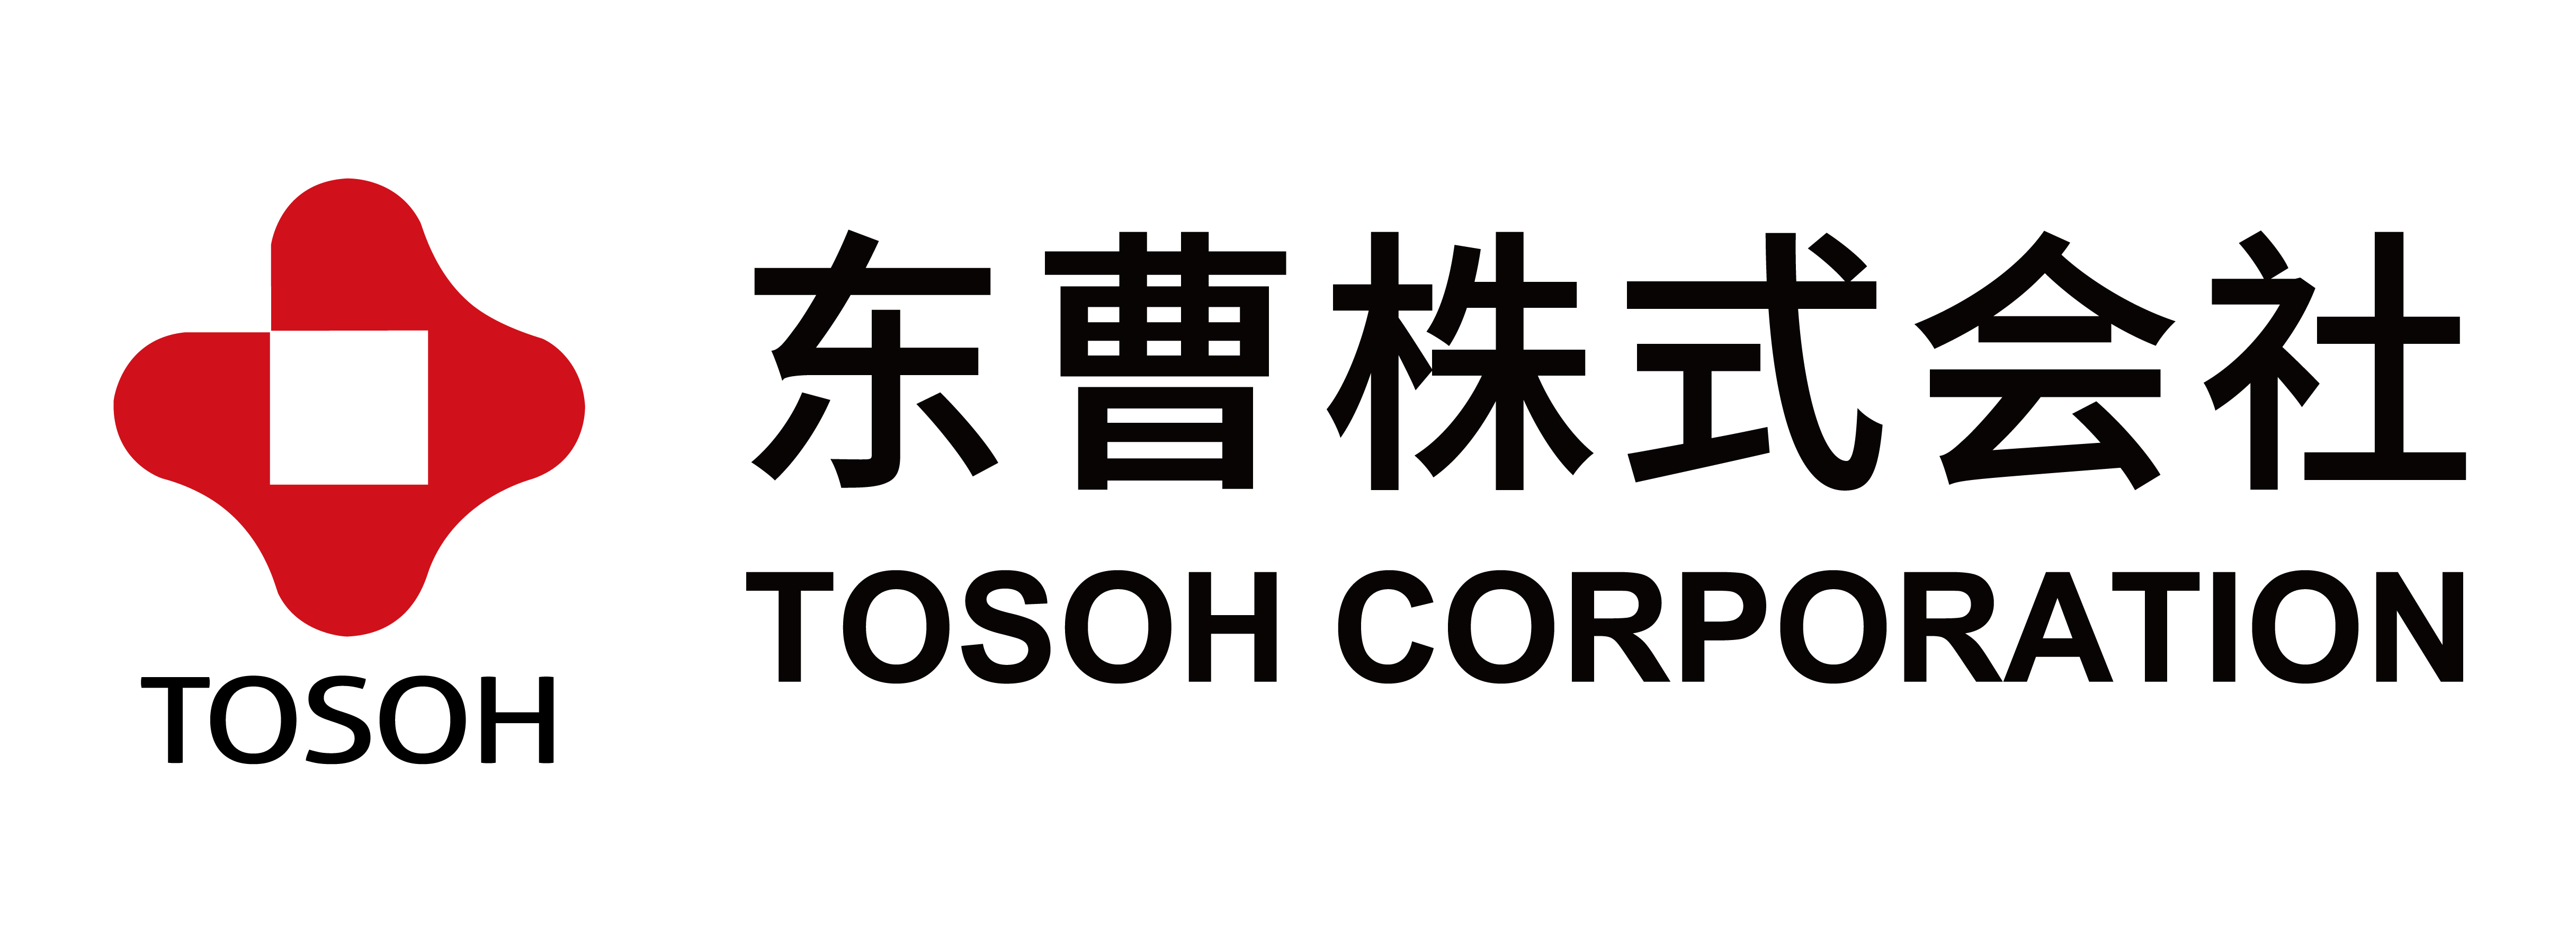 Tosoh Corporation_logo